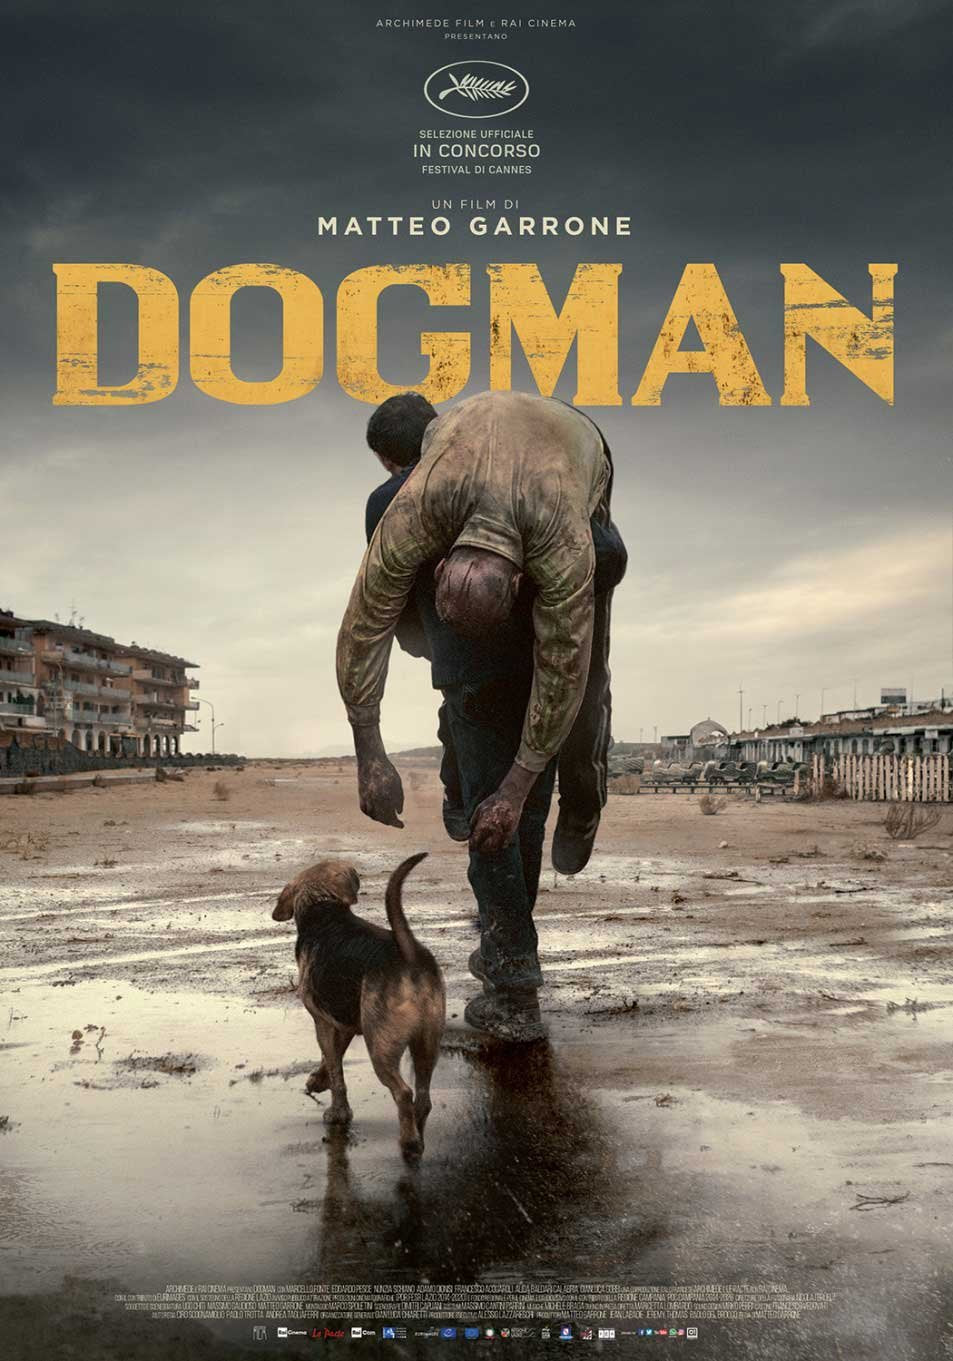 Dogman (DVD)